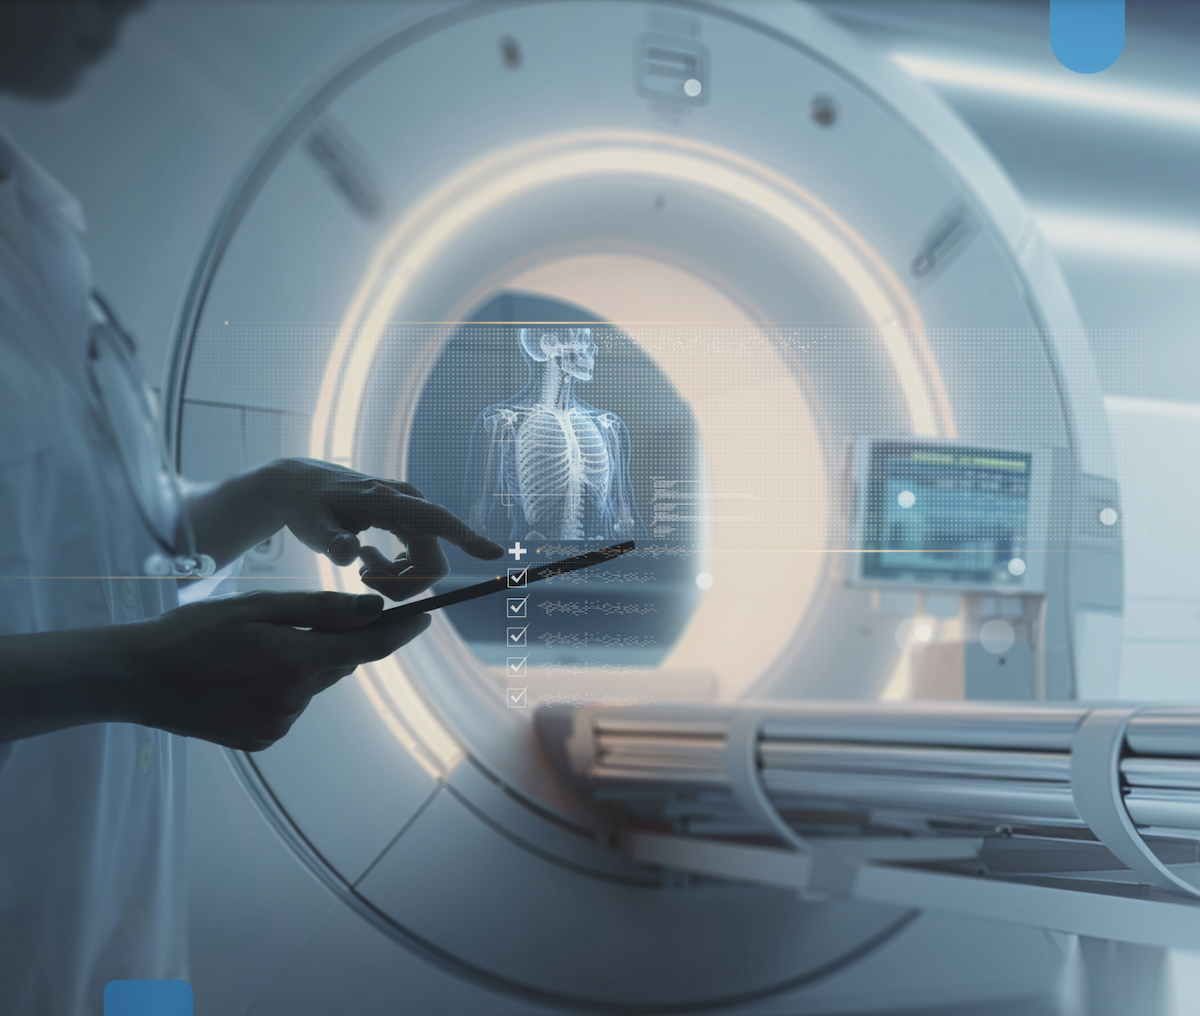 Doctor shown using an MRI.